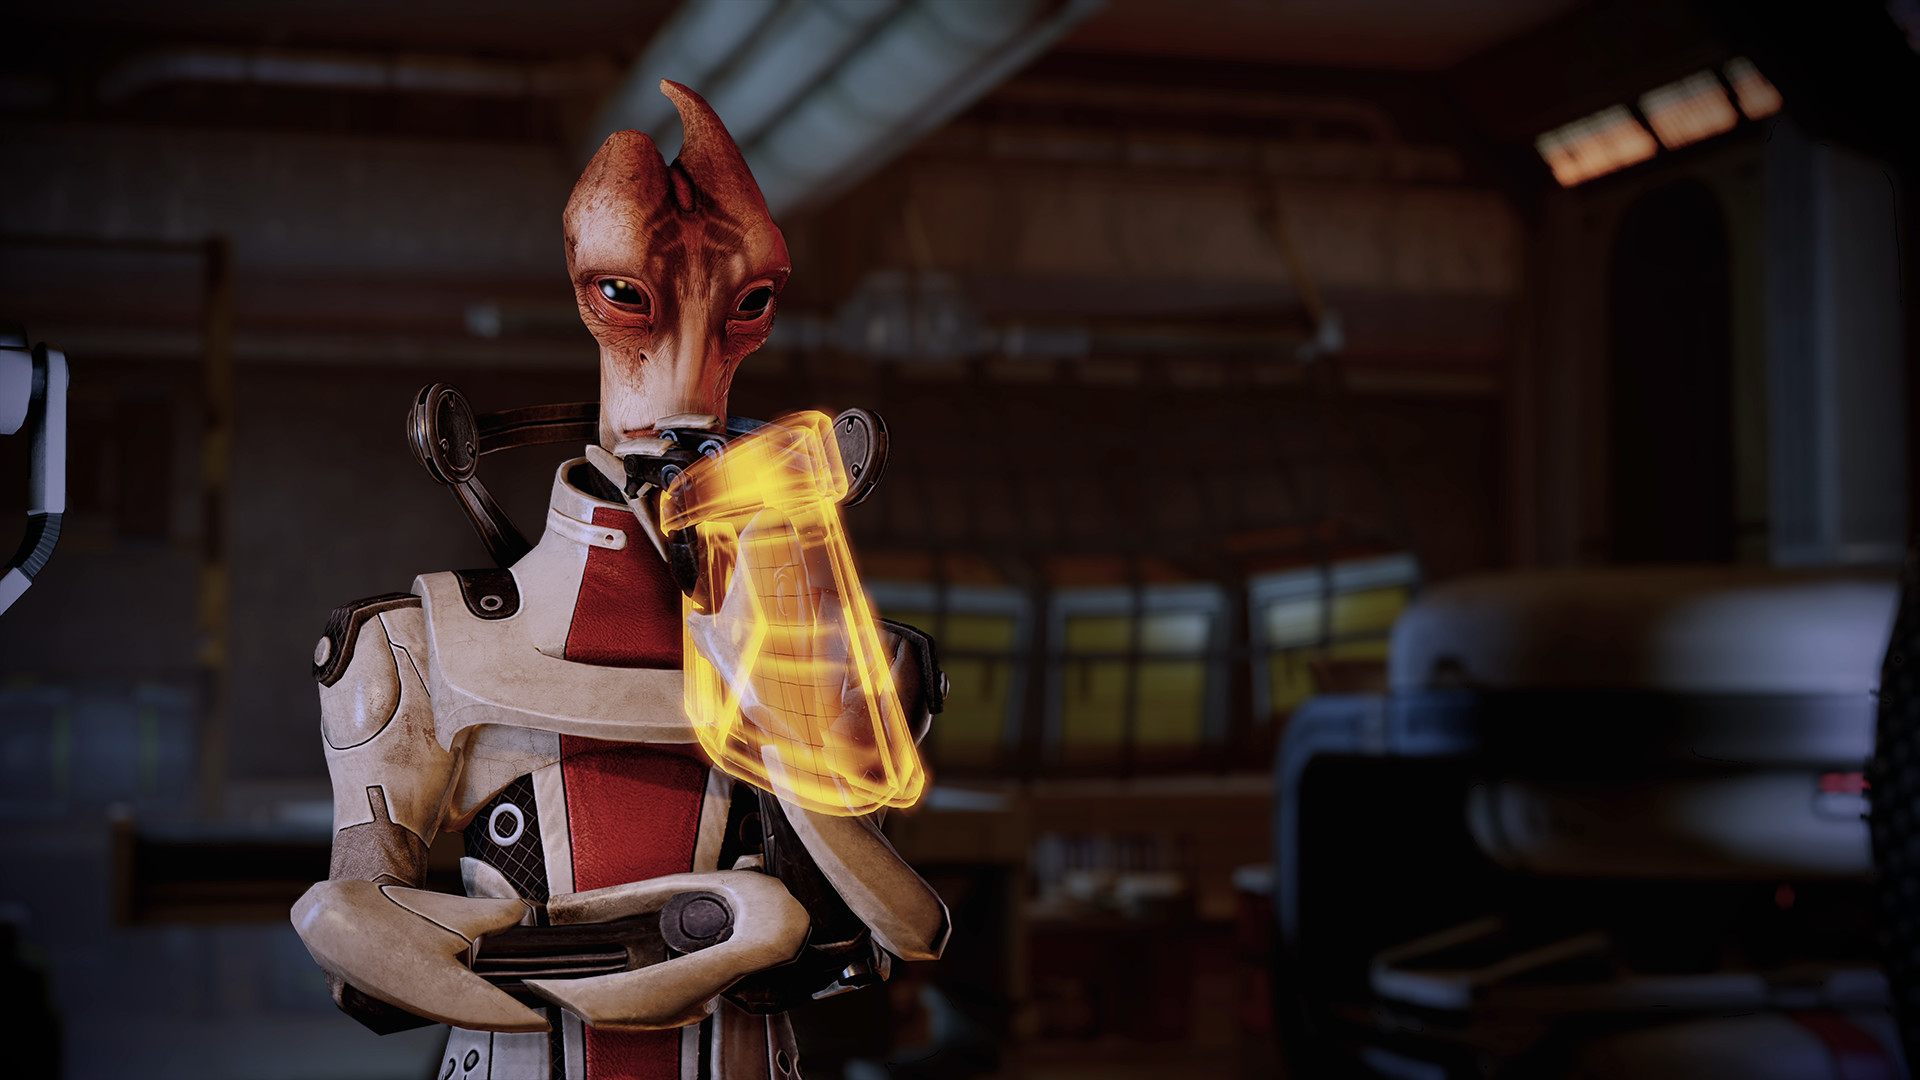 Mass Effect companions